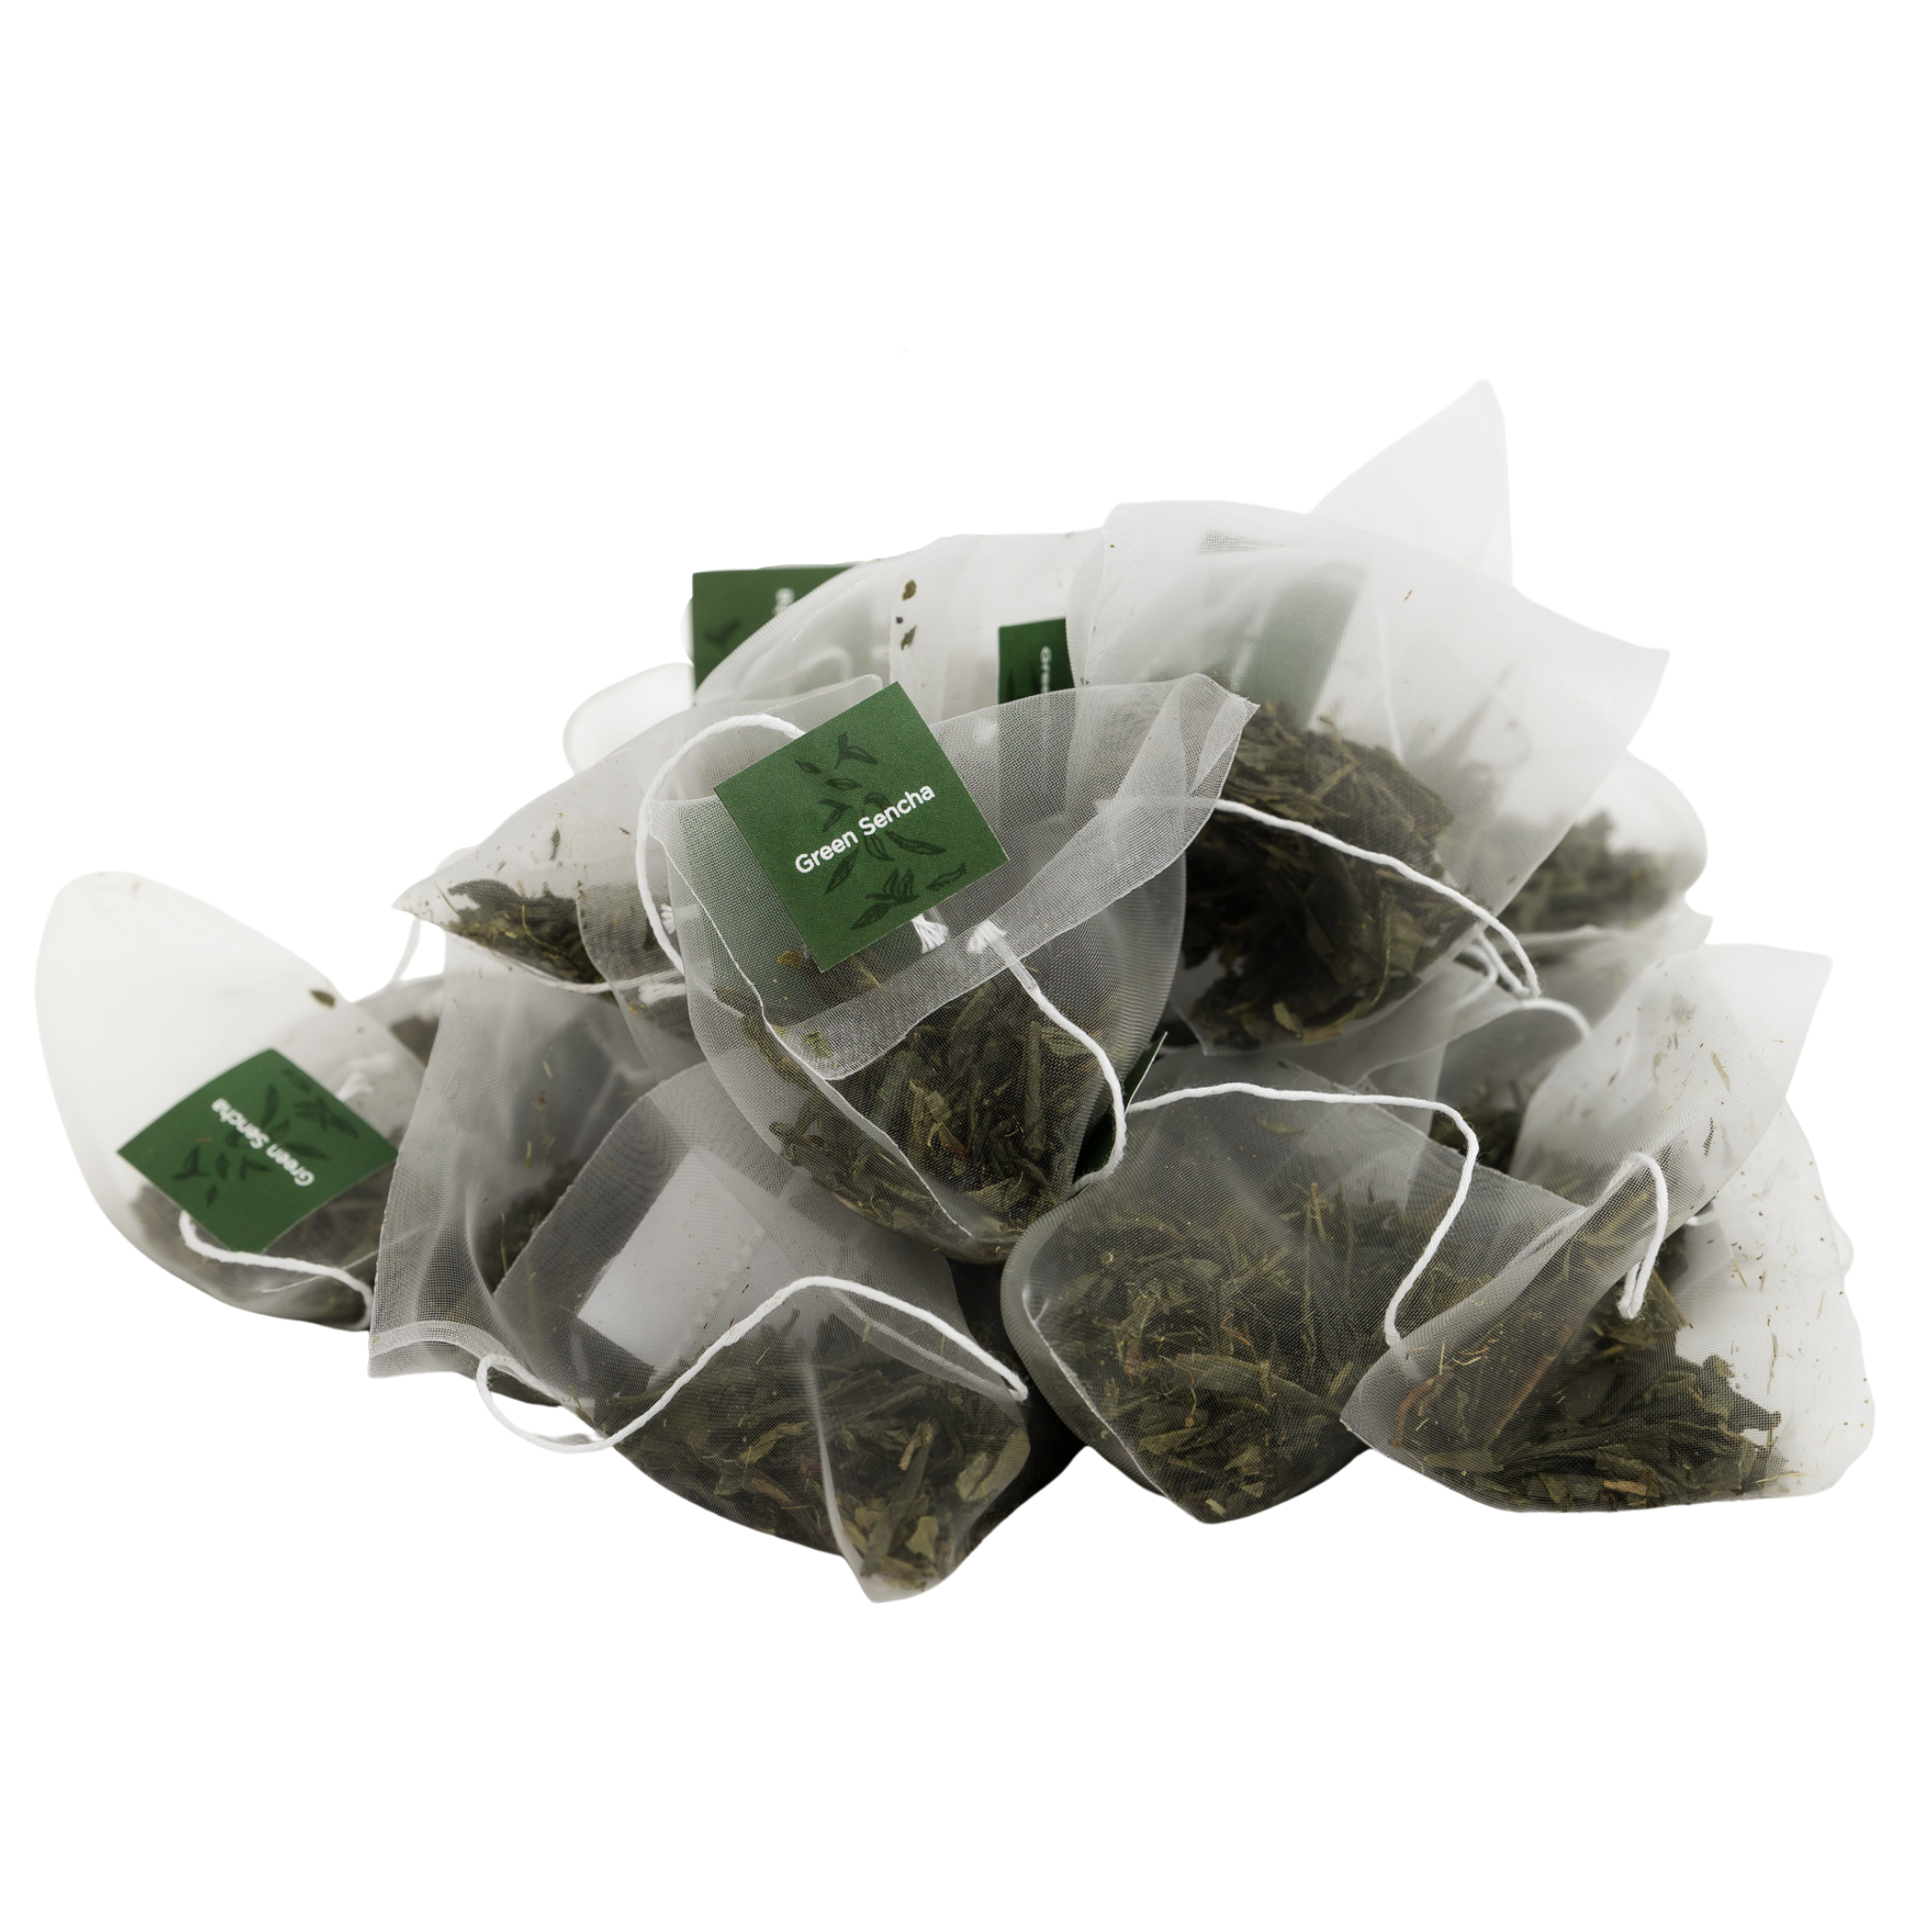 TEA MATE Loose Leaf Triangle Tea Baggers With TEA MATE Organic Supreme Green Tea Sencha Green Tea In Premium Biodegradable Tea Bags